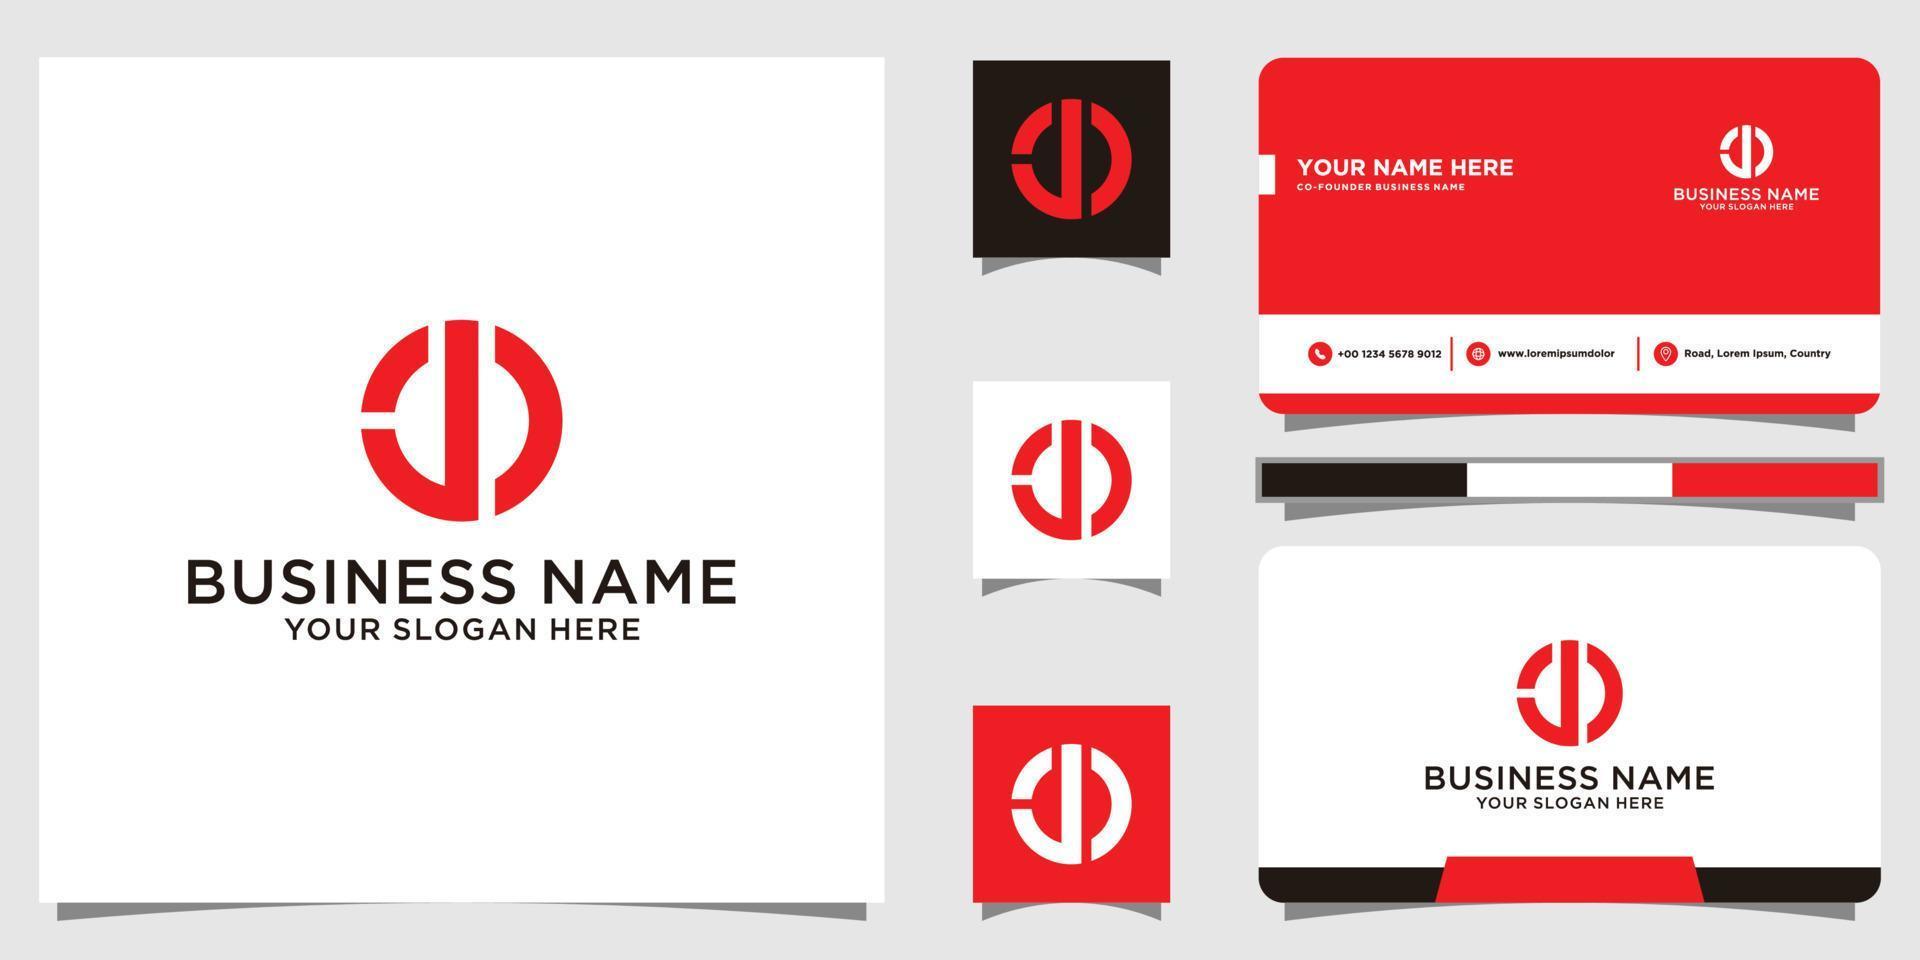 Letter Jo or Jb monogram logo with business card design vector